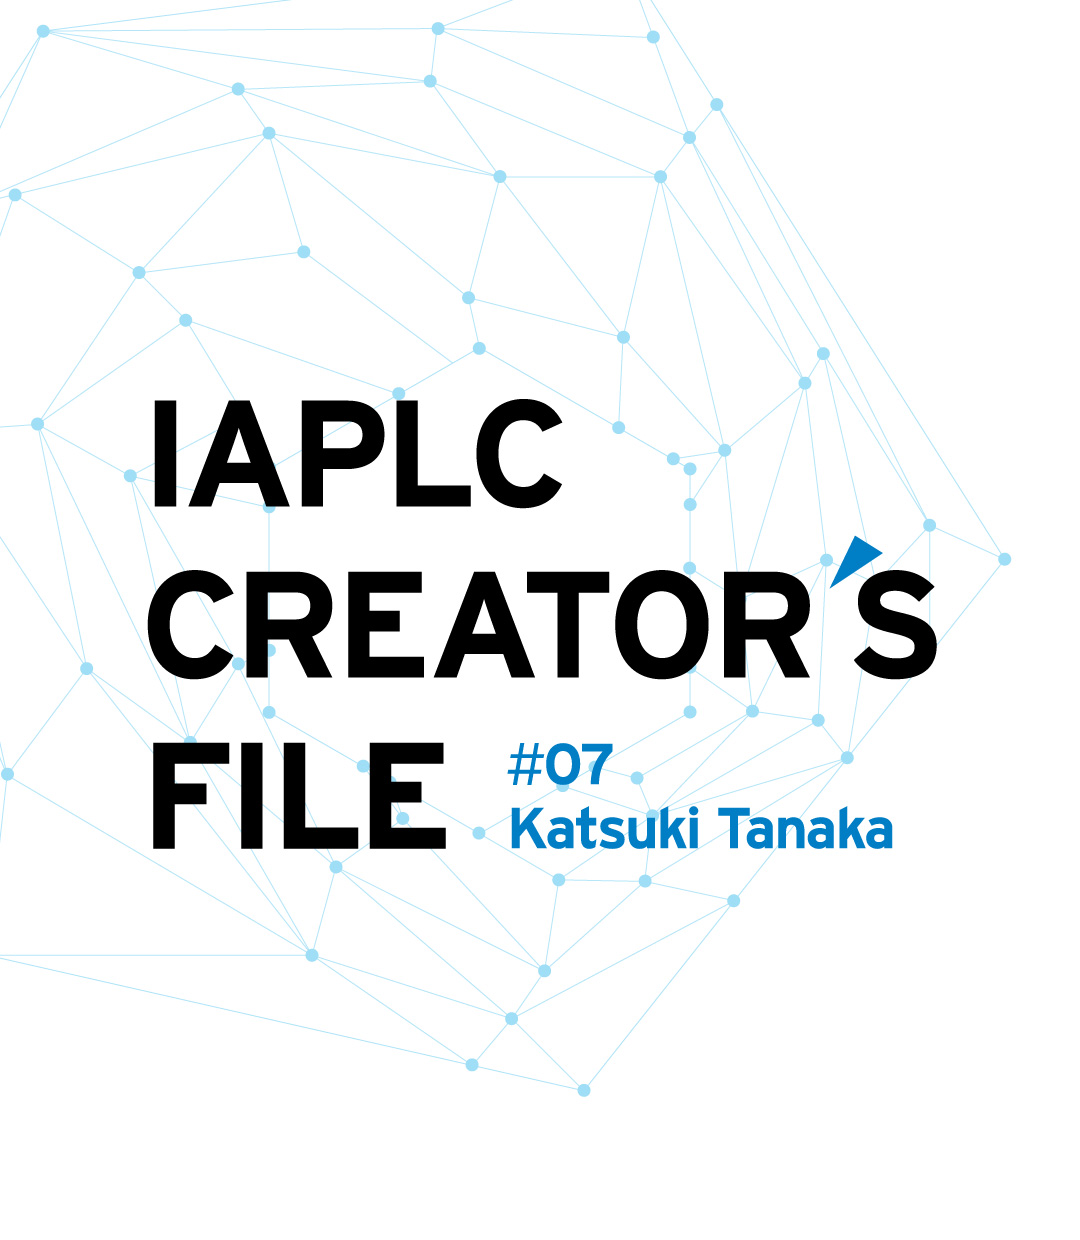 IAPLC CREATOR’S FILE #07 タナカカツキ